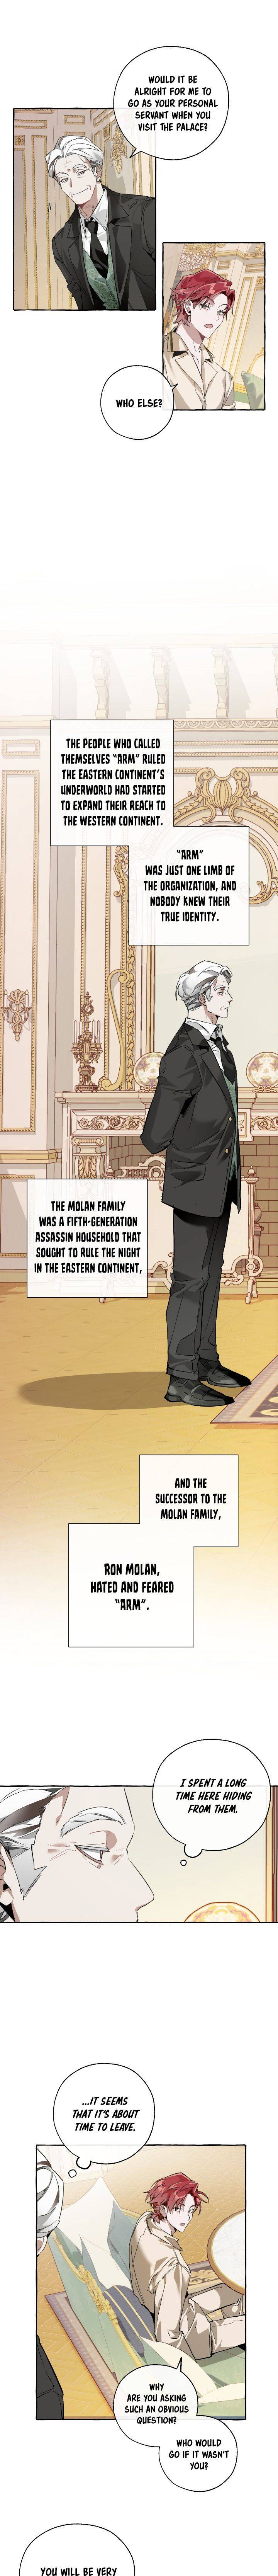 Trash of the Count's Family manga, read Trash of the Count's Family, Trash of the Count's Family anime